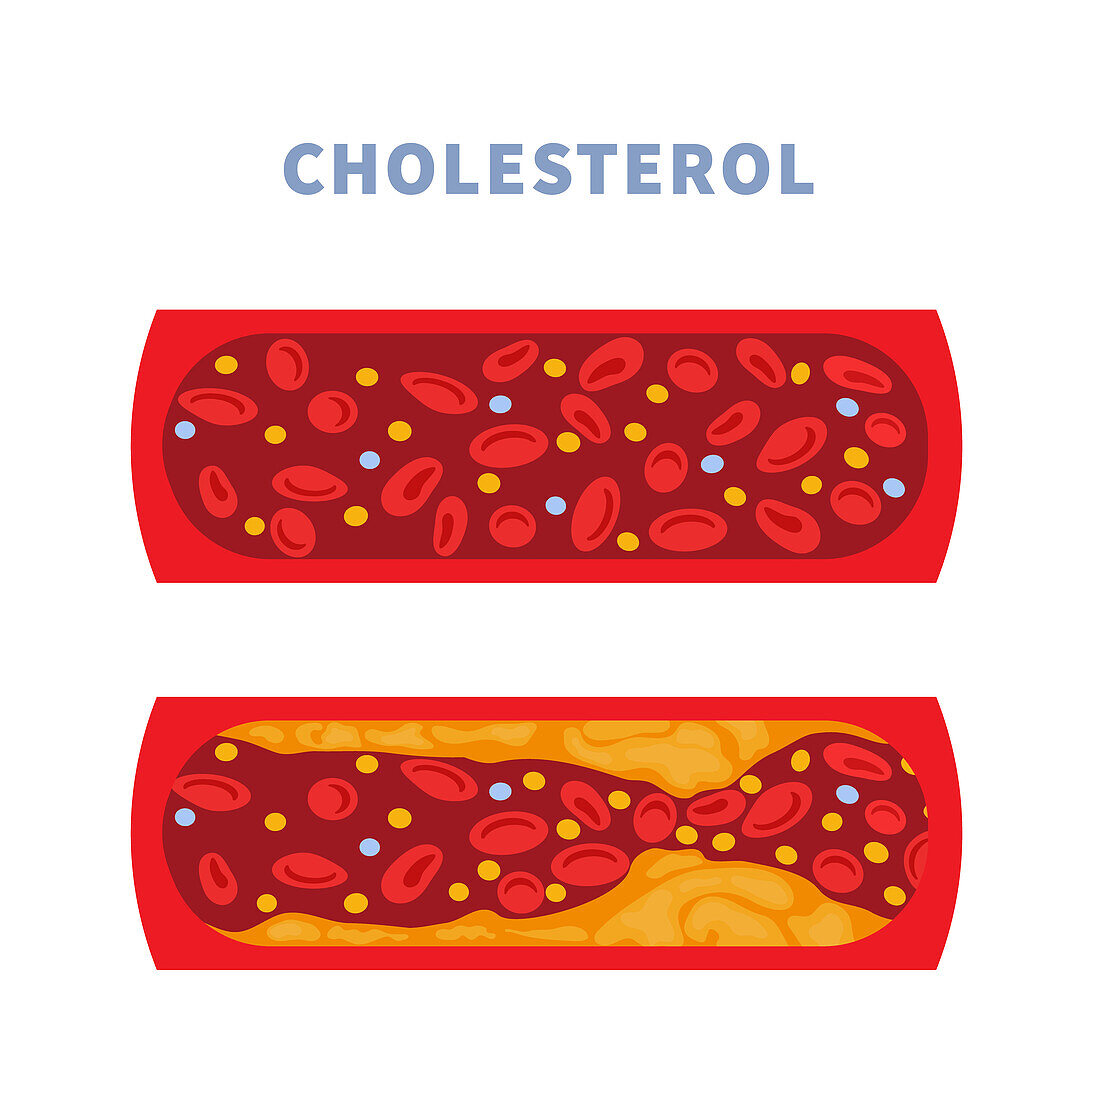 Artery health, conceptual illustration